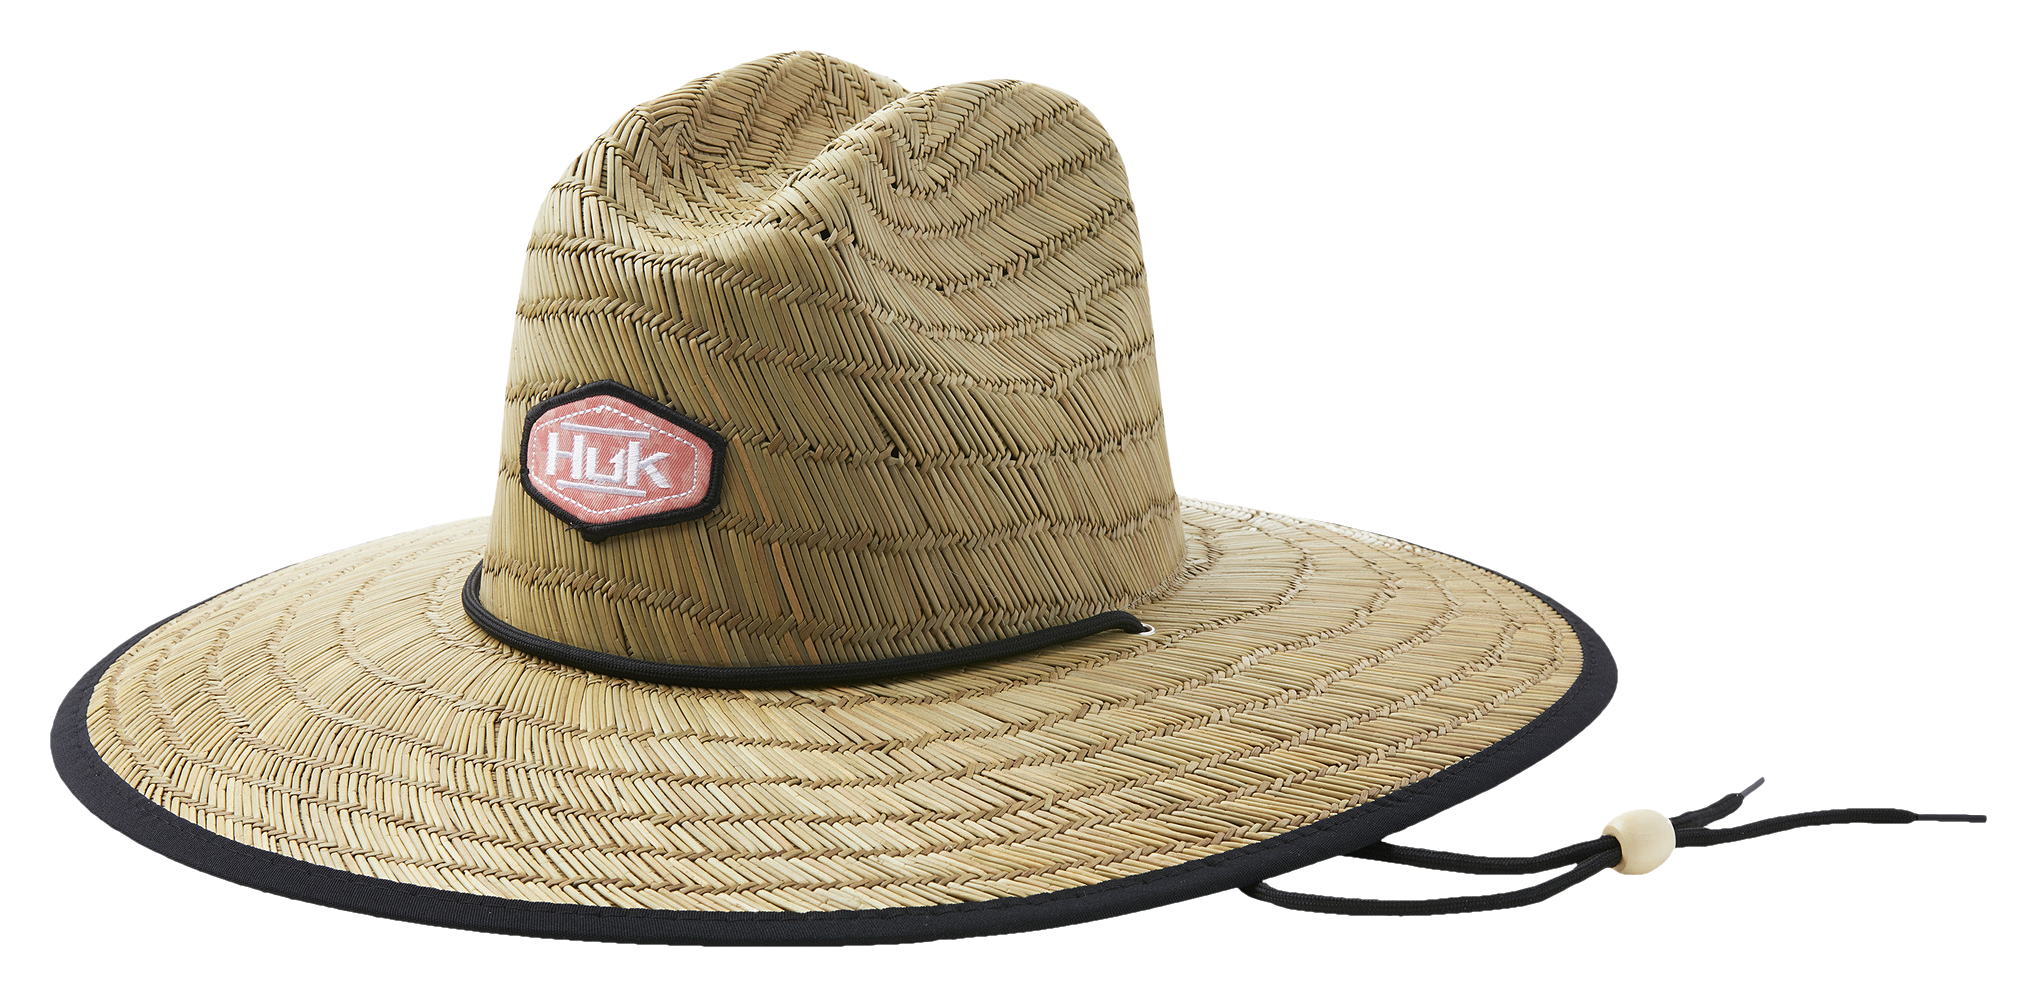 Huk Running Lakes Straw Hat for Ladies